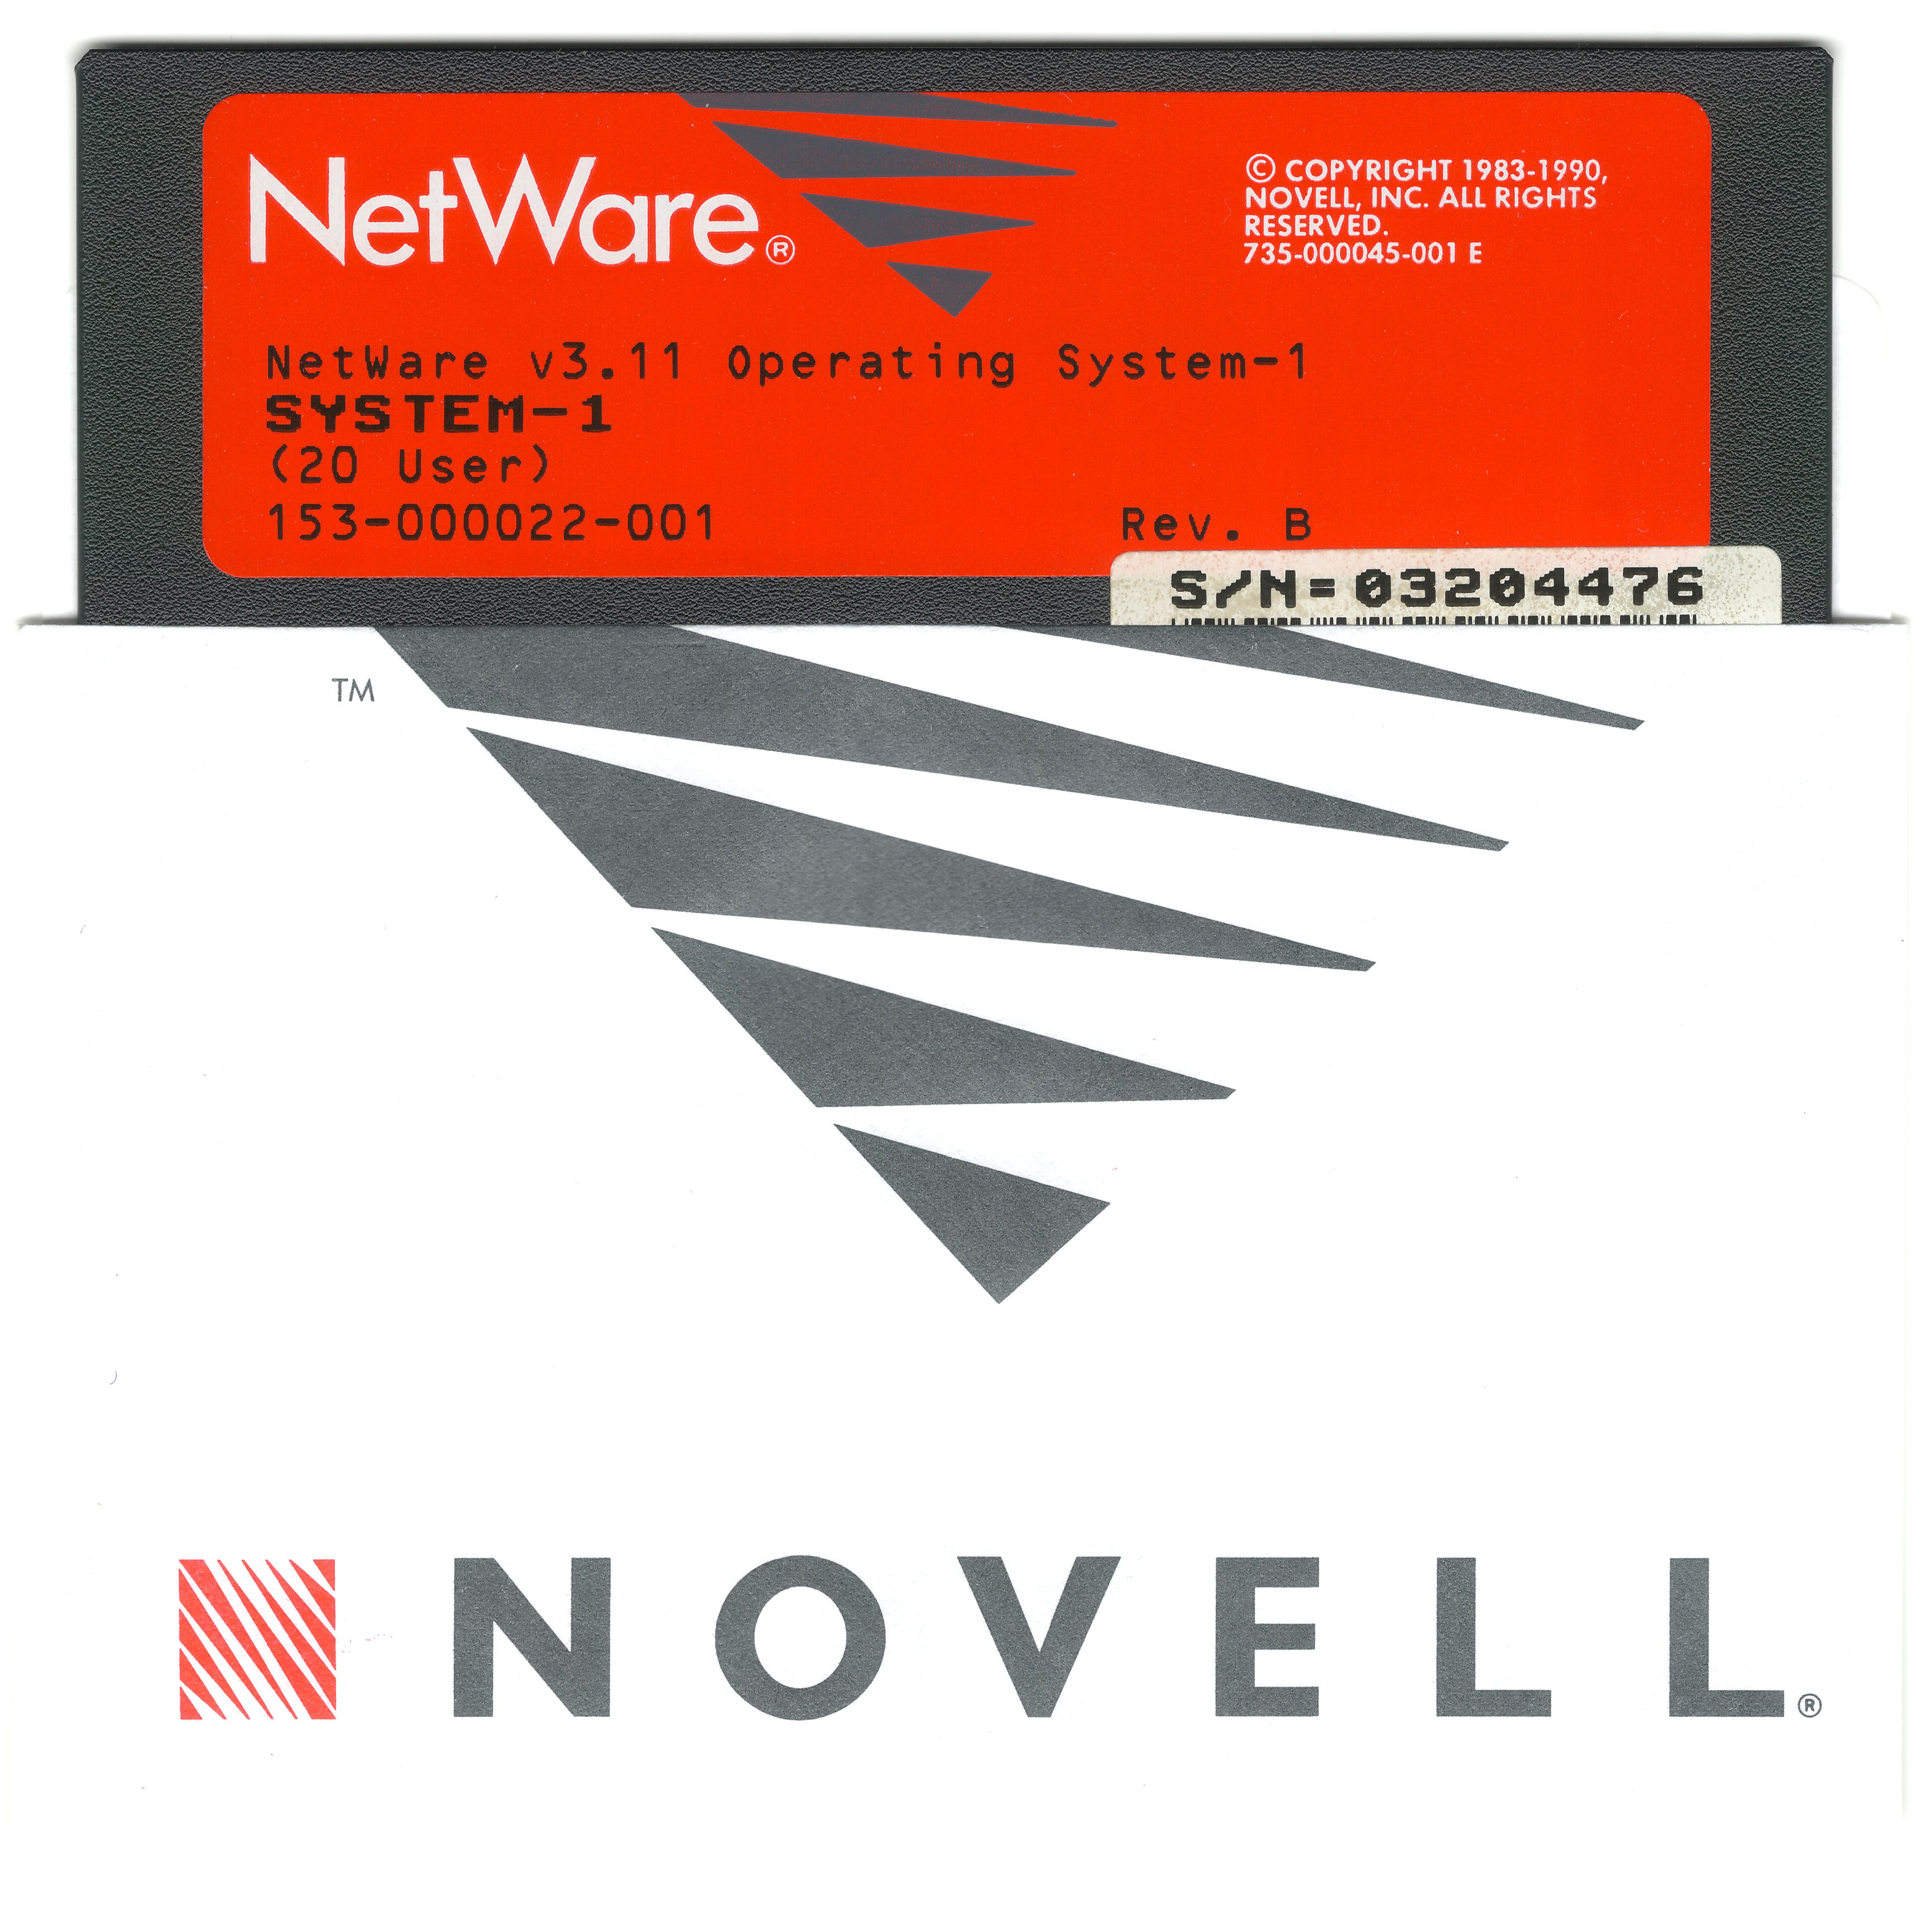 NetWare packaging